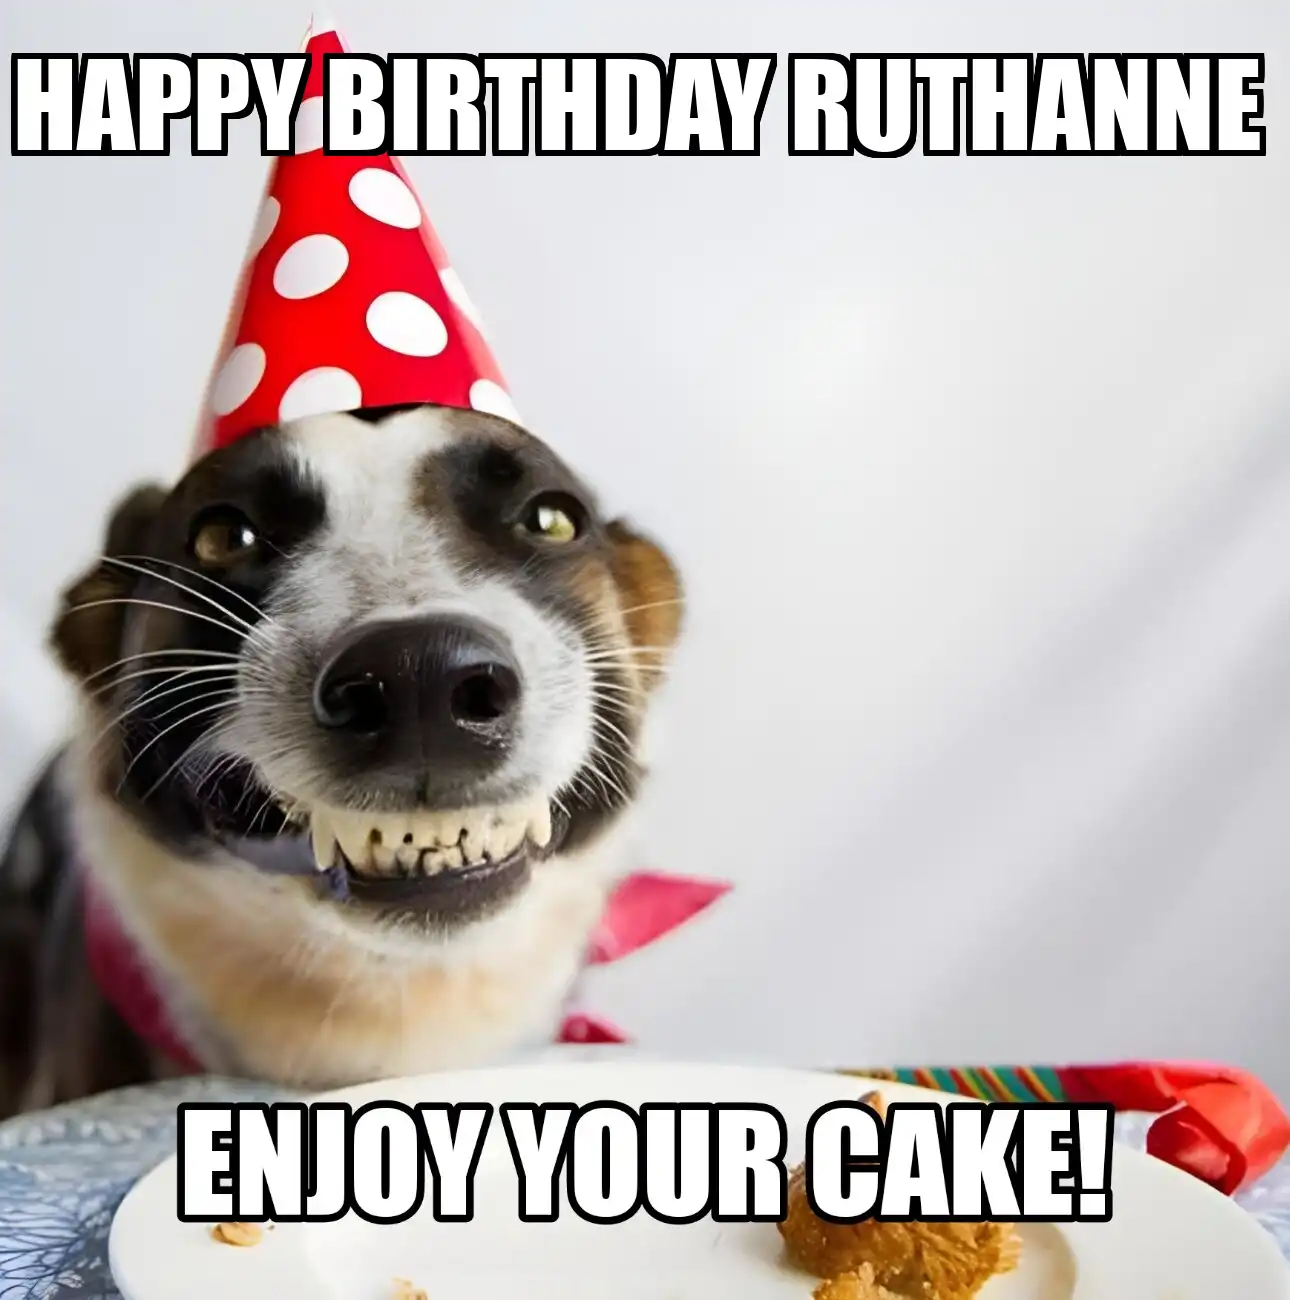 Happy Birthday Ruthanne Enjoy Your Cake Dog Meme